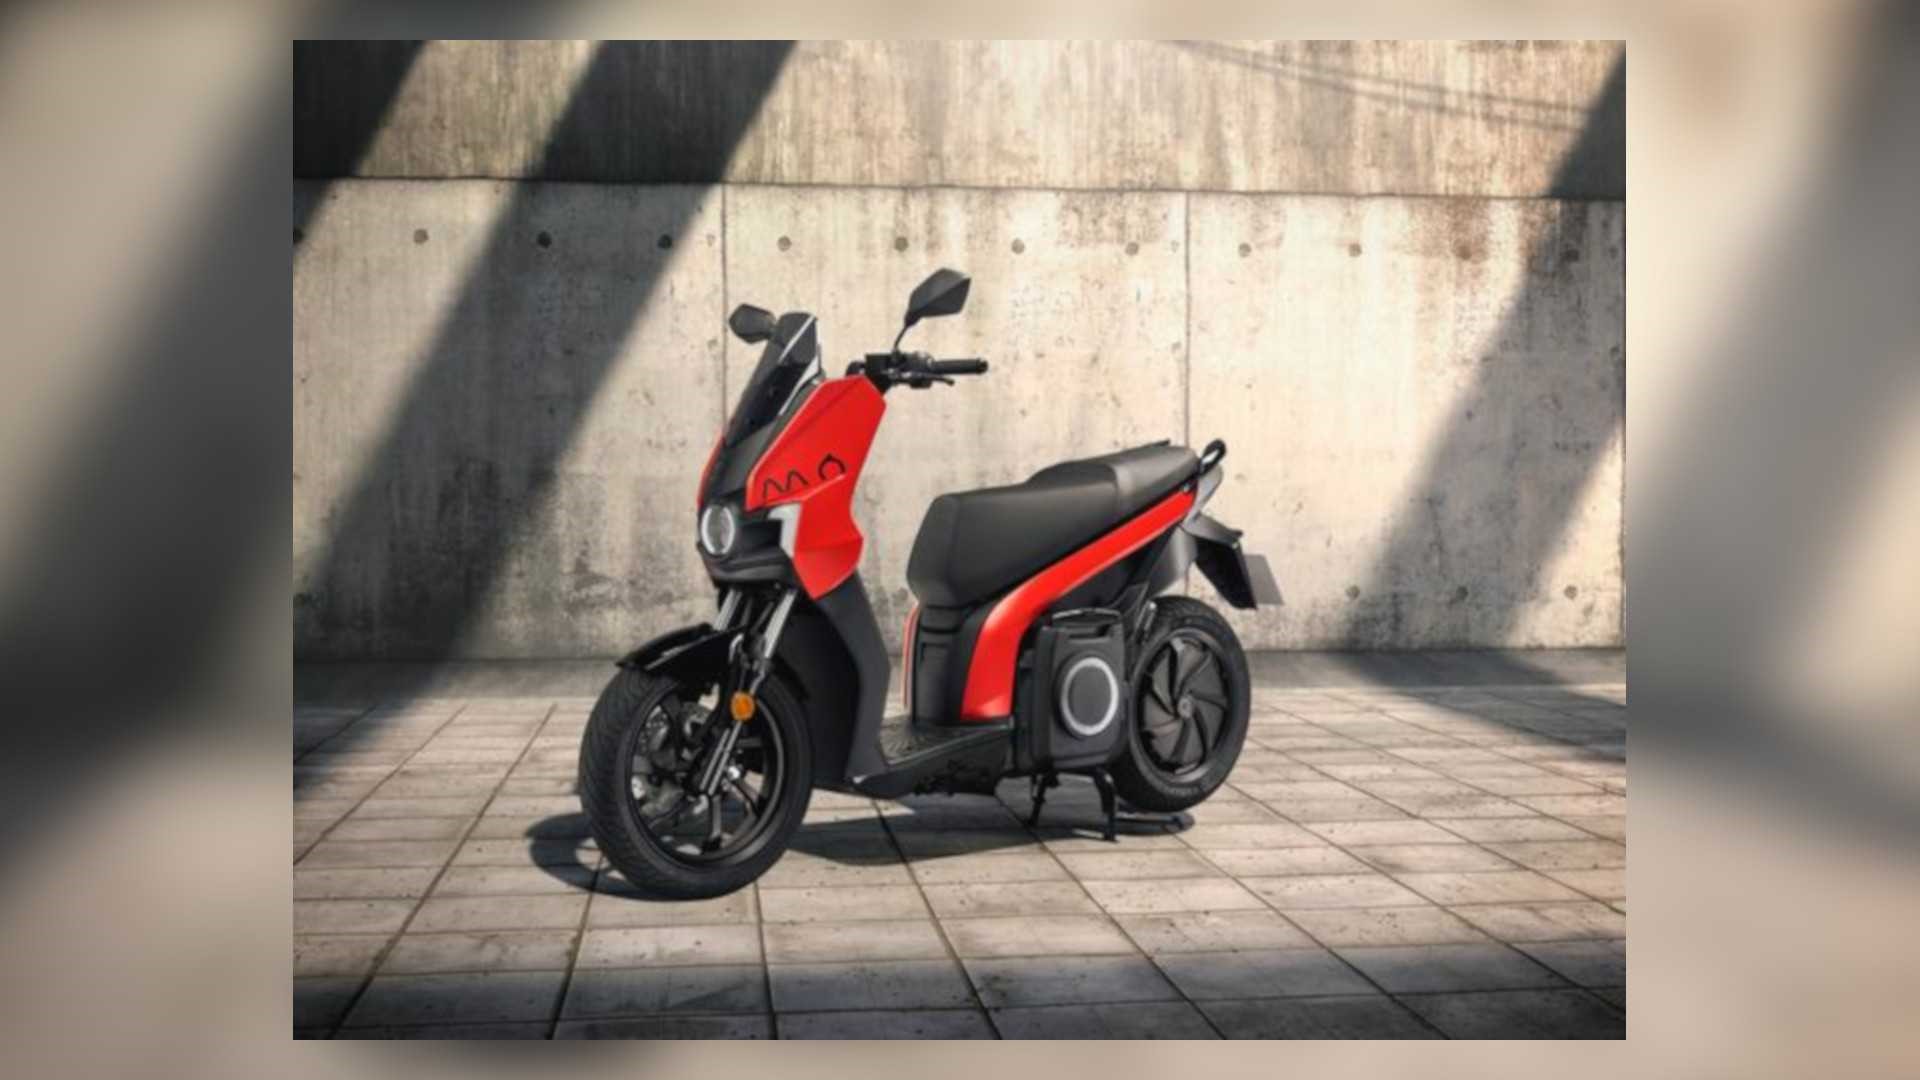 SeatMóE-Scooter 125看起来不错，红色和黑色